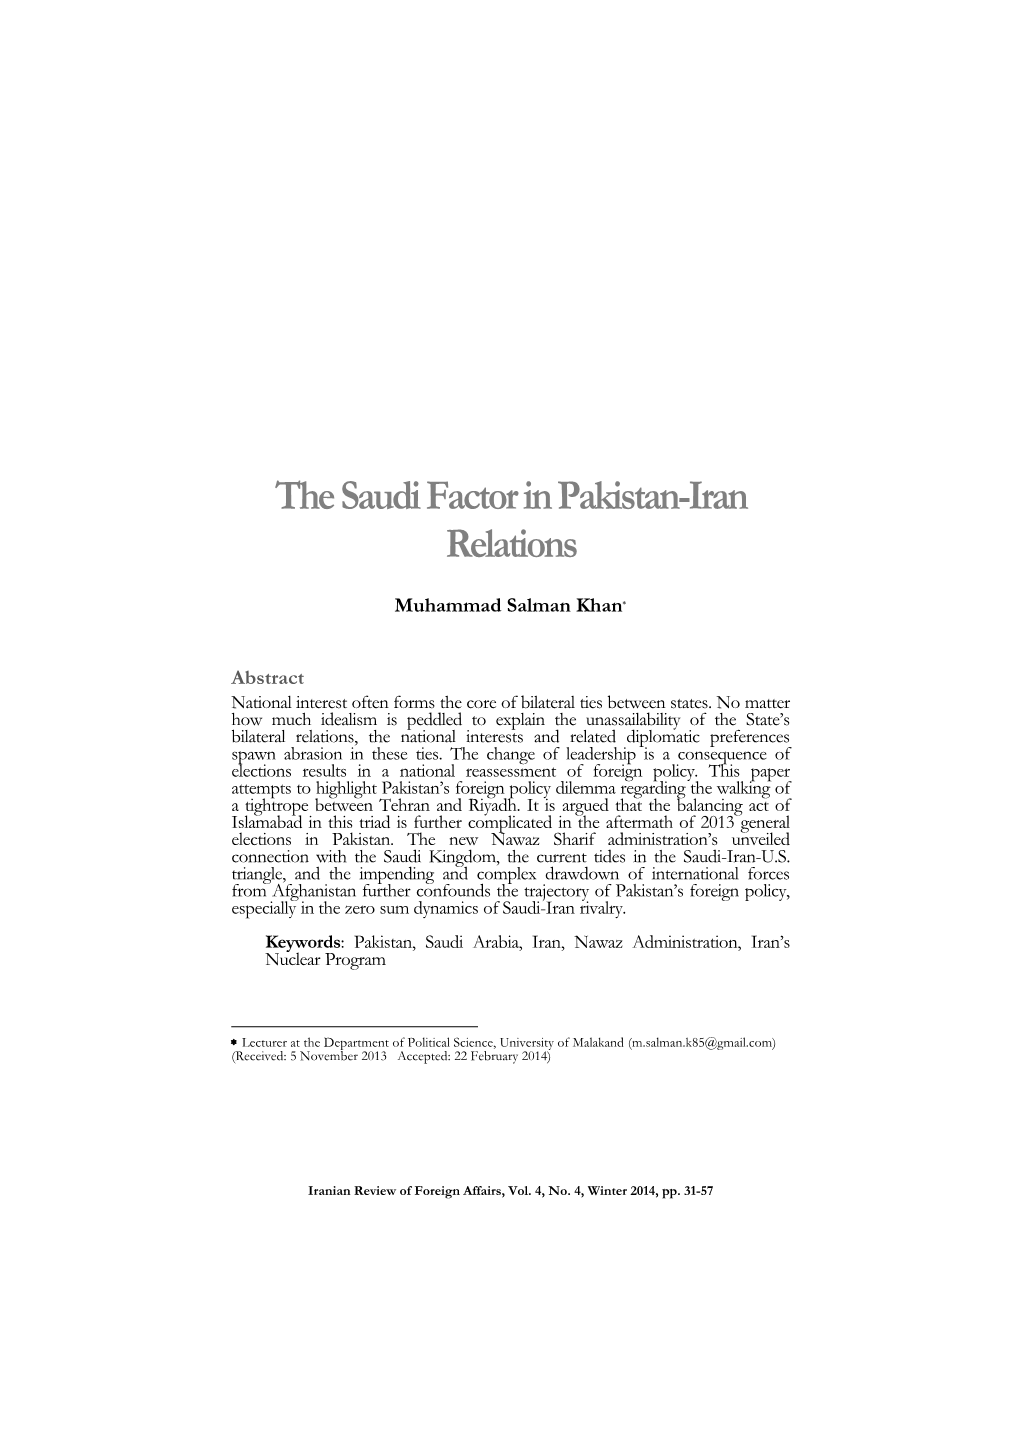 The Saudi Factor in Pakistan-Iran Relations